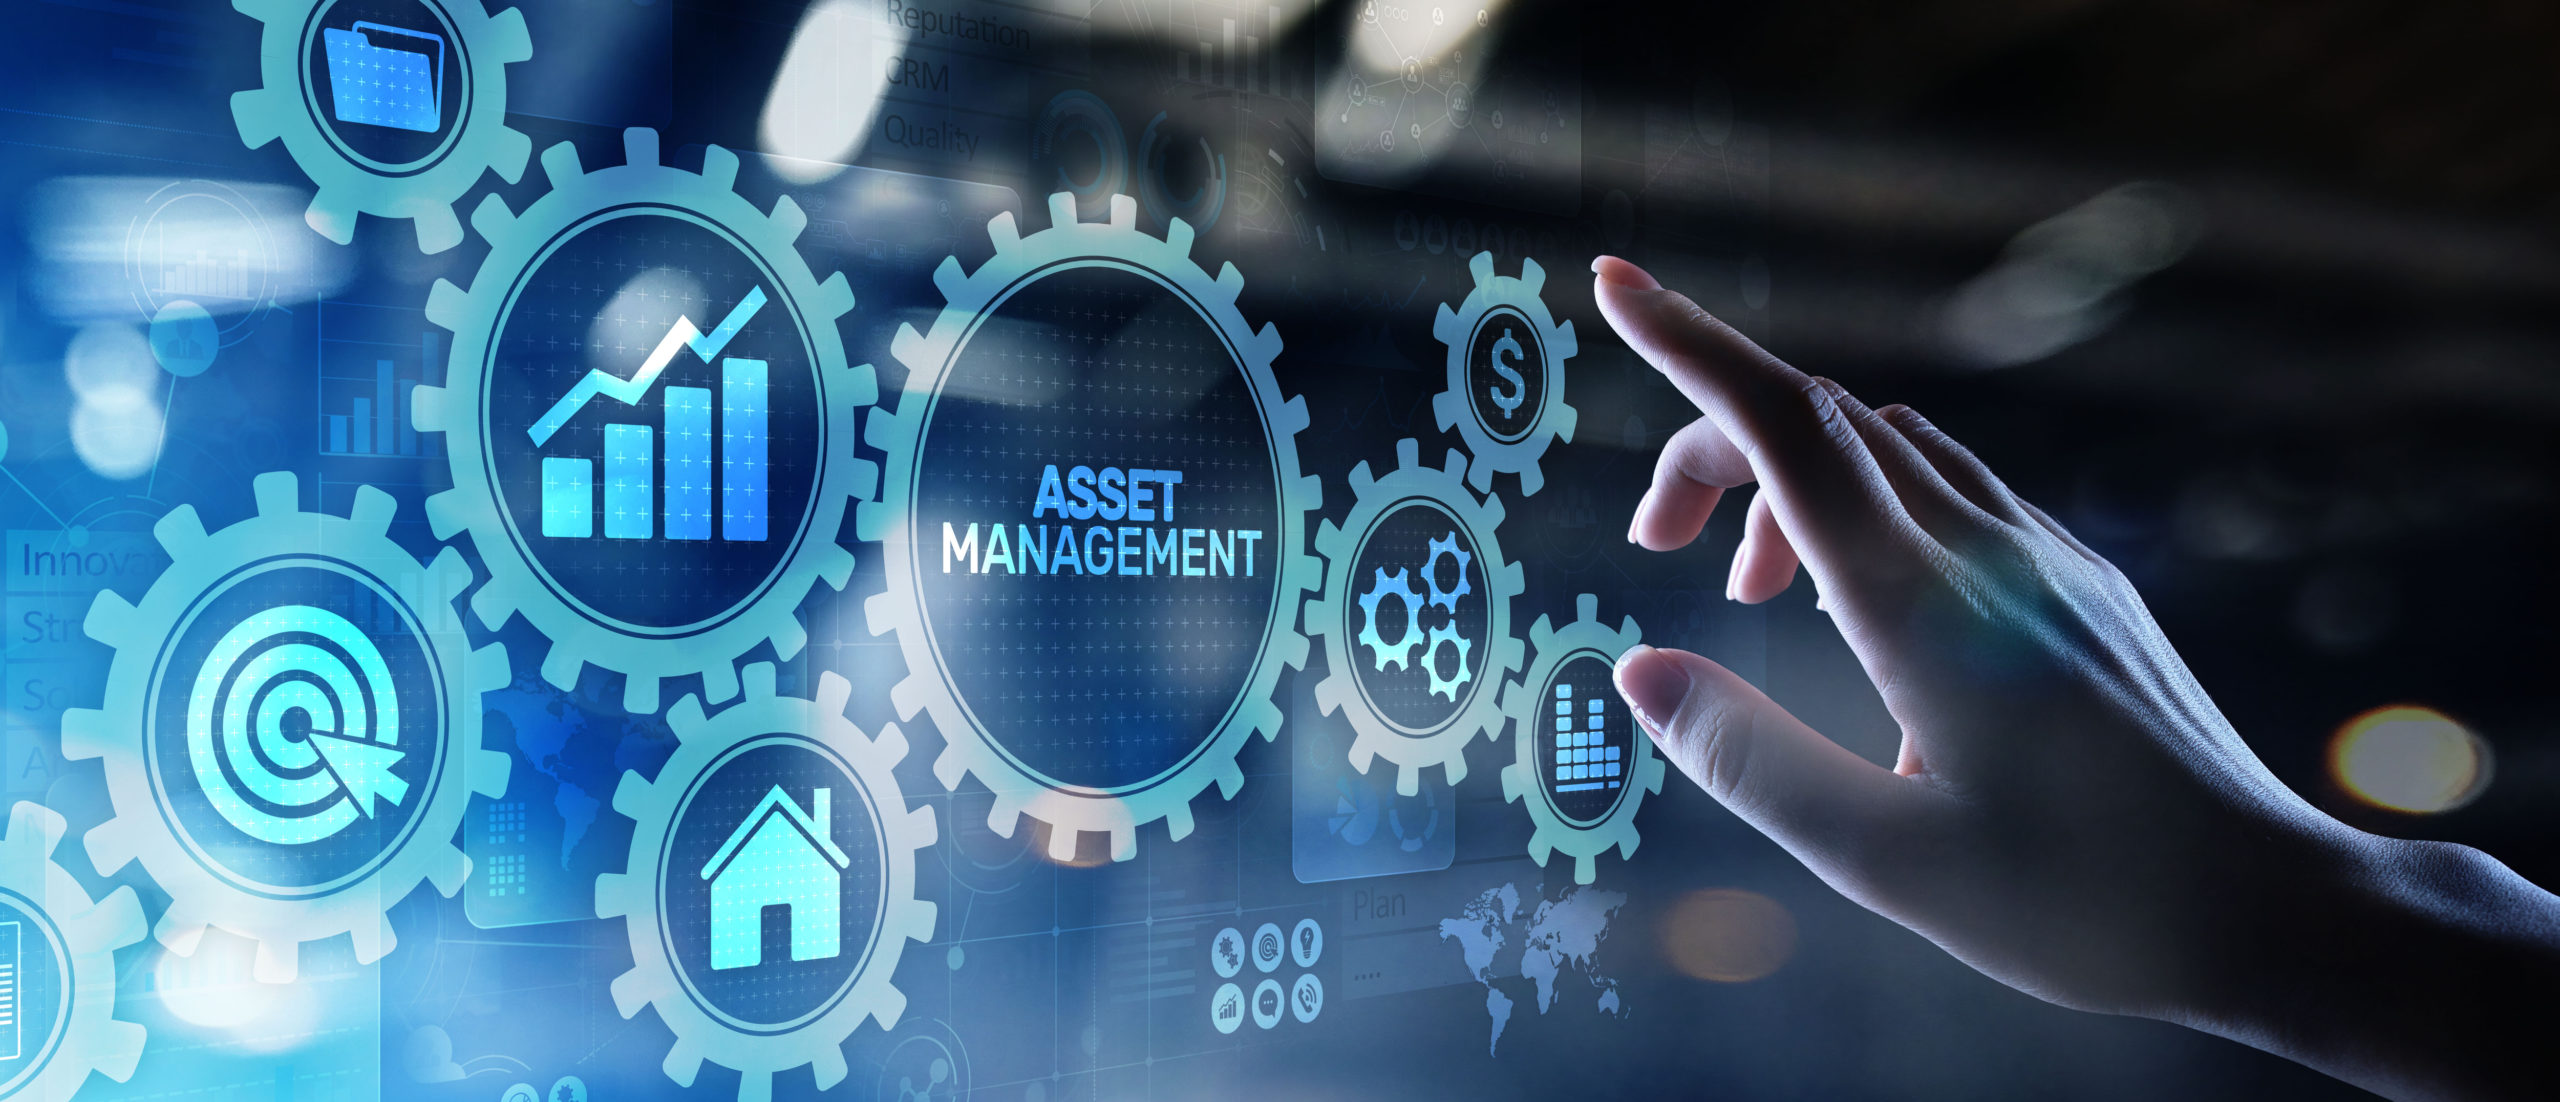 Asset Management Oakville, MO | Financial Planners | Investment Advisors | Wealth Management